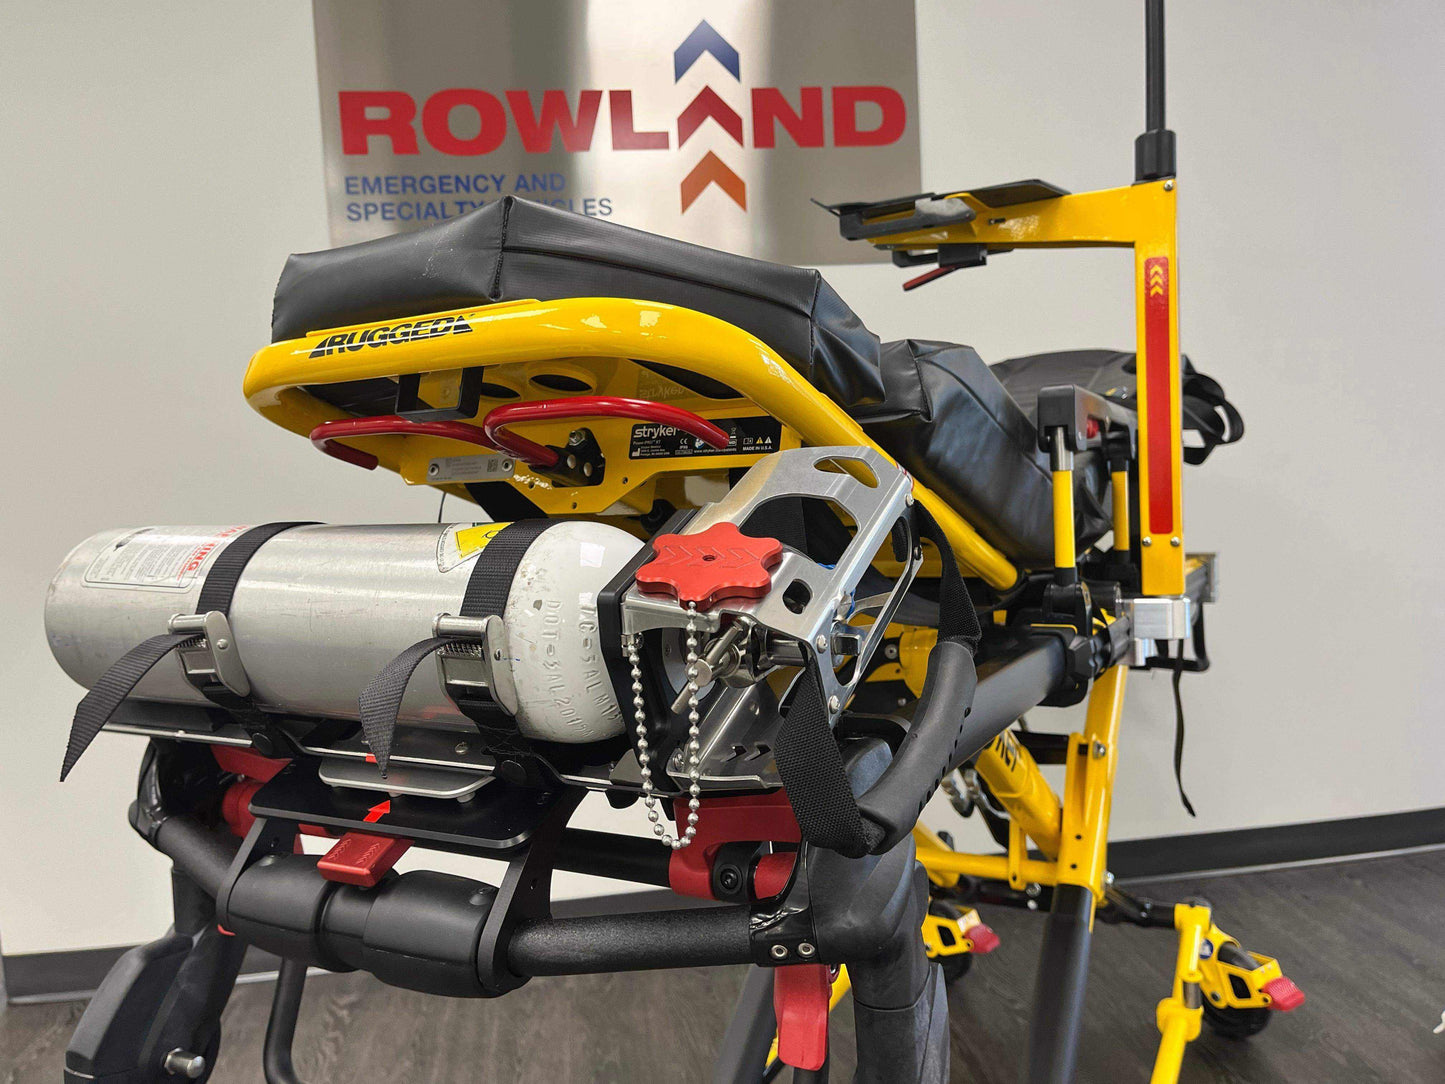 Stryker® Power-PRO XT & Power-PRO 2 Cot Mounted Oxygen Carry Kit by Rowland Emergency by Rowland Emergency